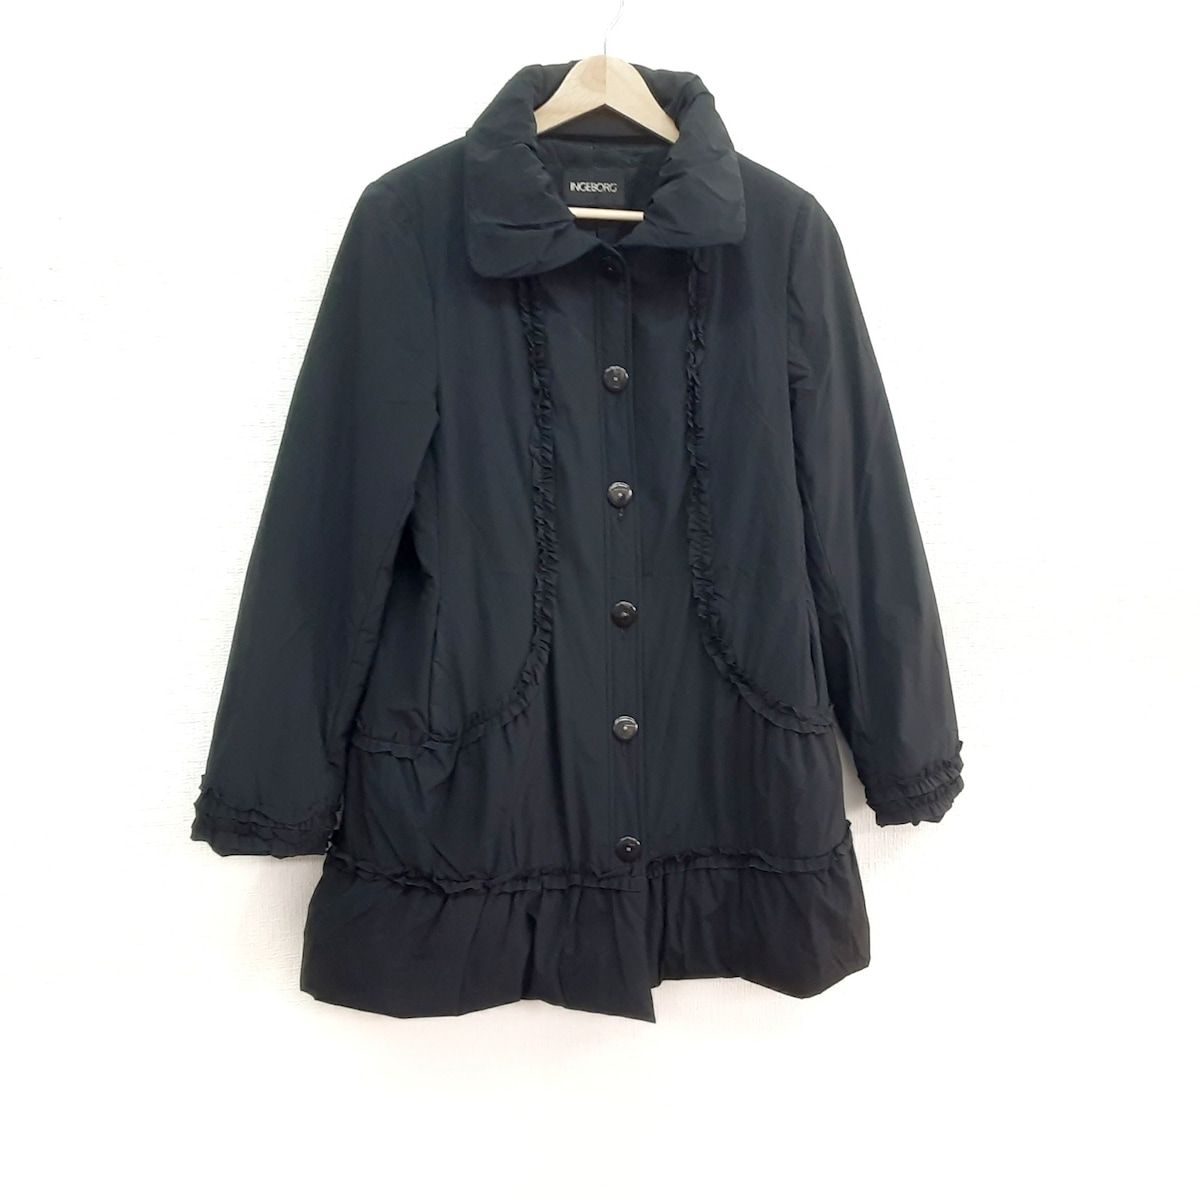 INGEBORG(インゲボルグ) コート サイズ9 M レディース美品 - 黒 長袖 